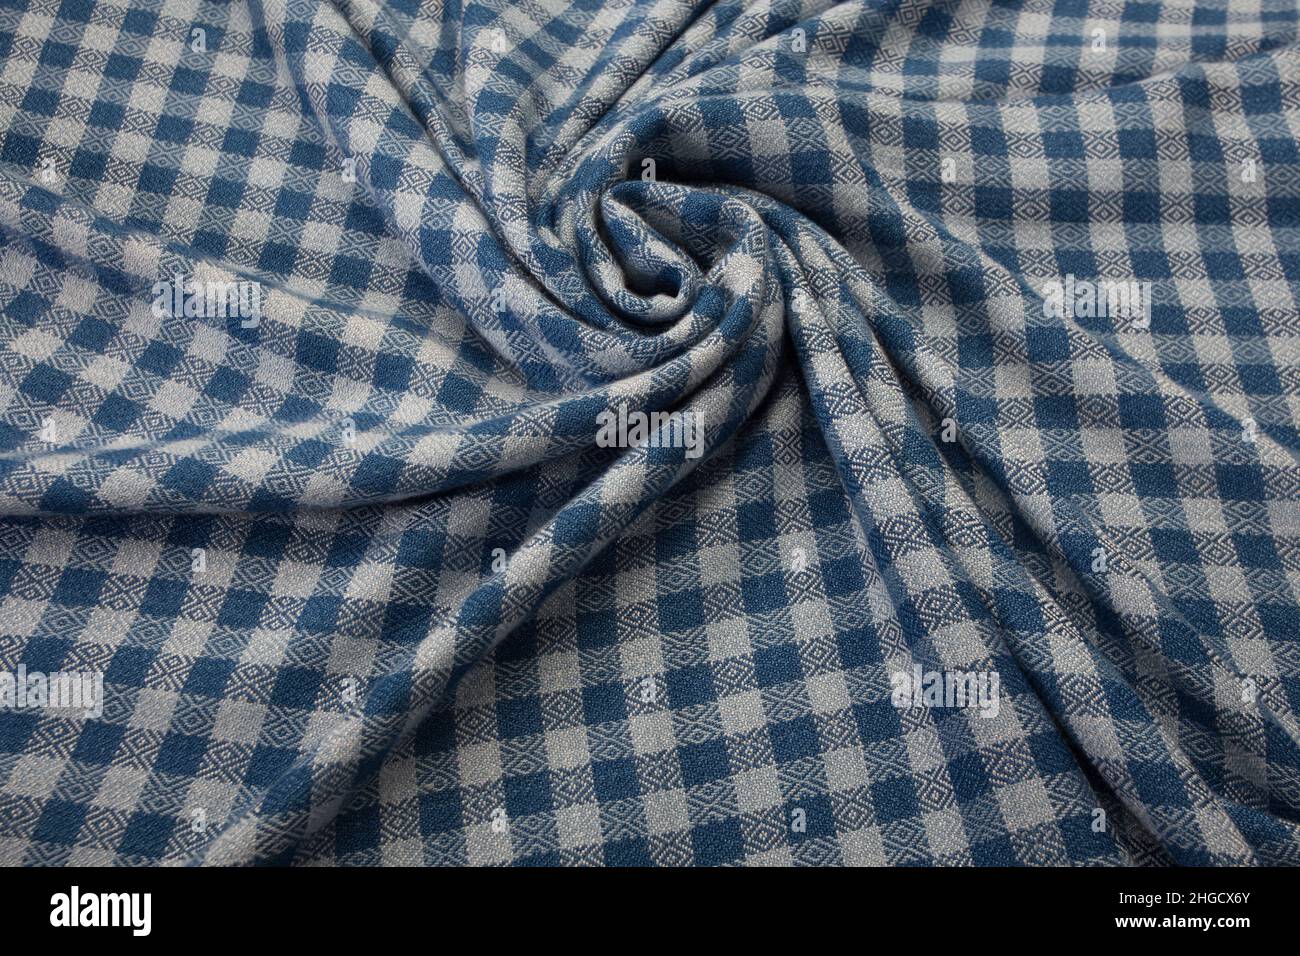 Close up of texture of hand woven plaid shawl, Thai cotton indigo dyed Stock Photo